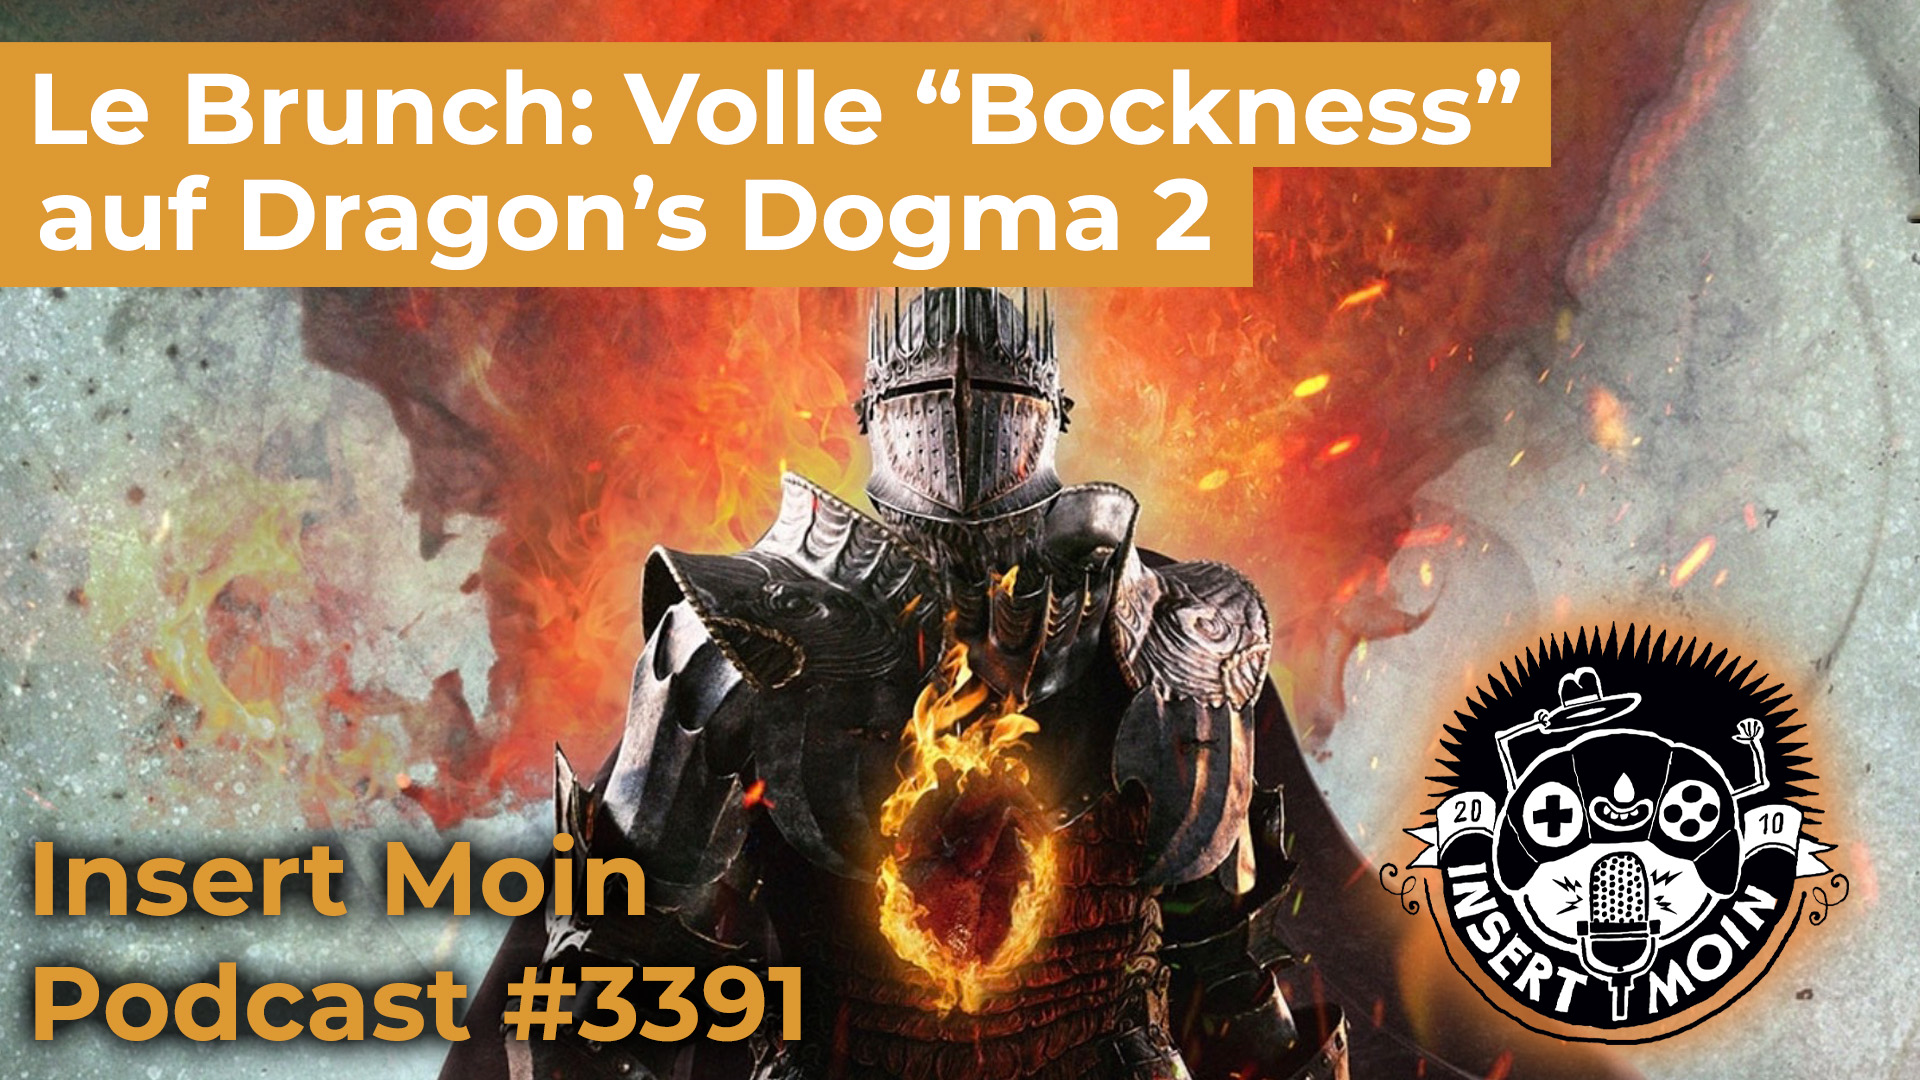 Le Brunch: Volle "Bockness" auf Dragon's Dogma